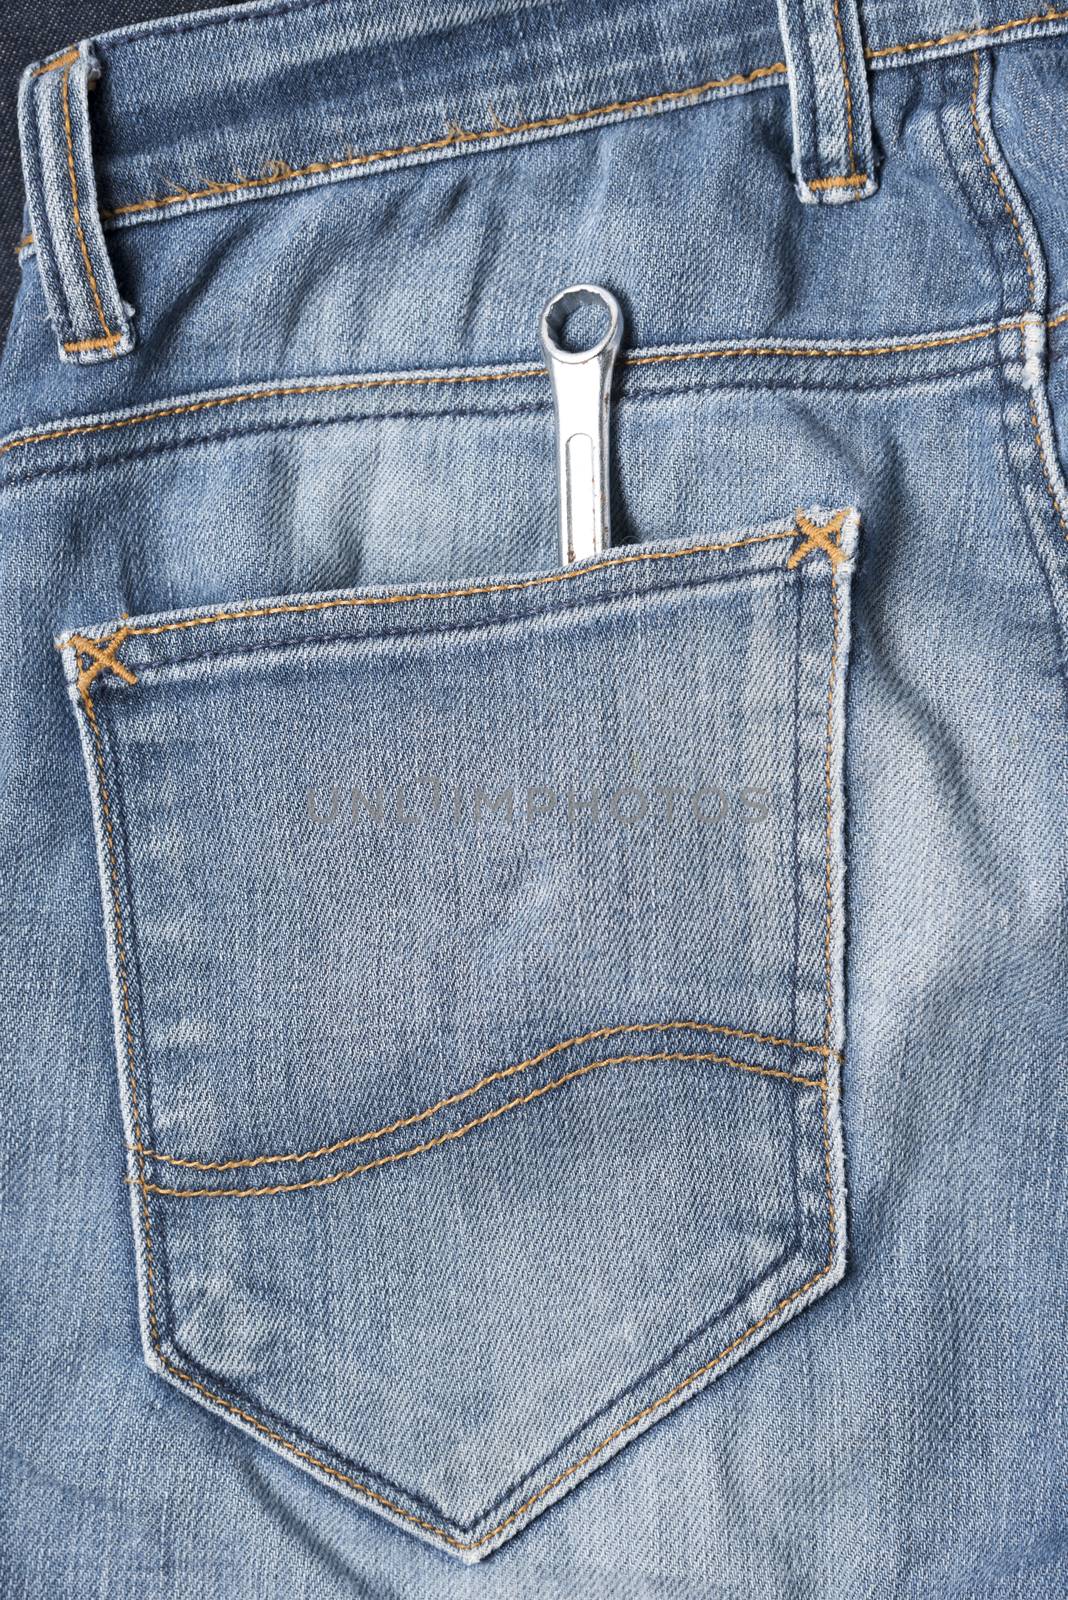 screwdriver in jean pocket pants